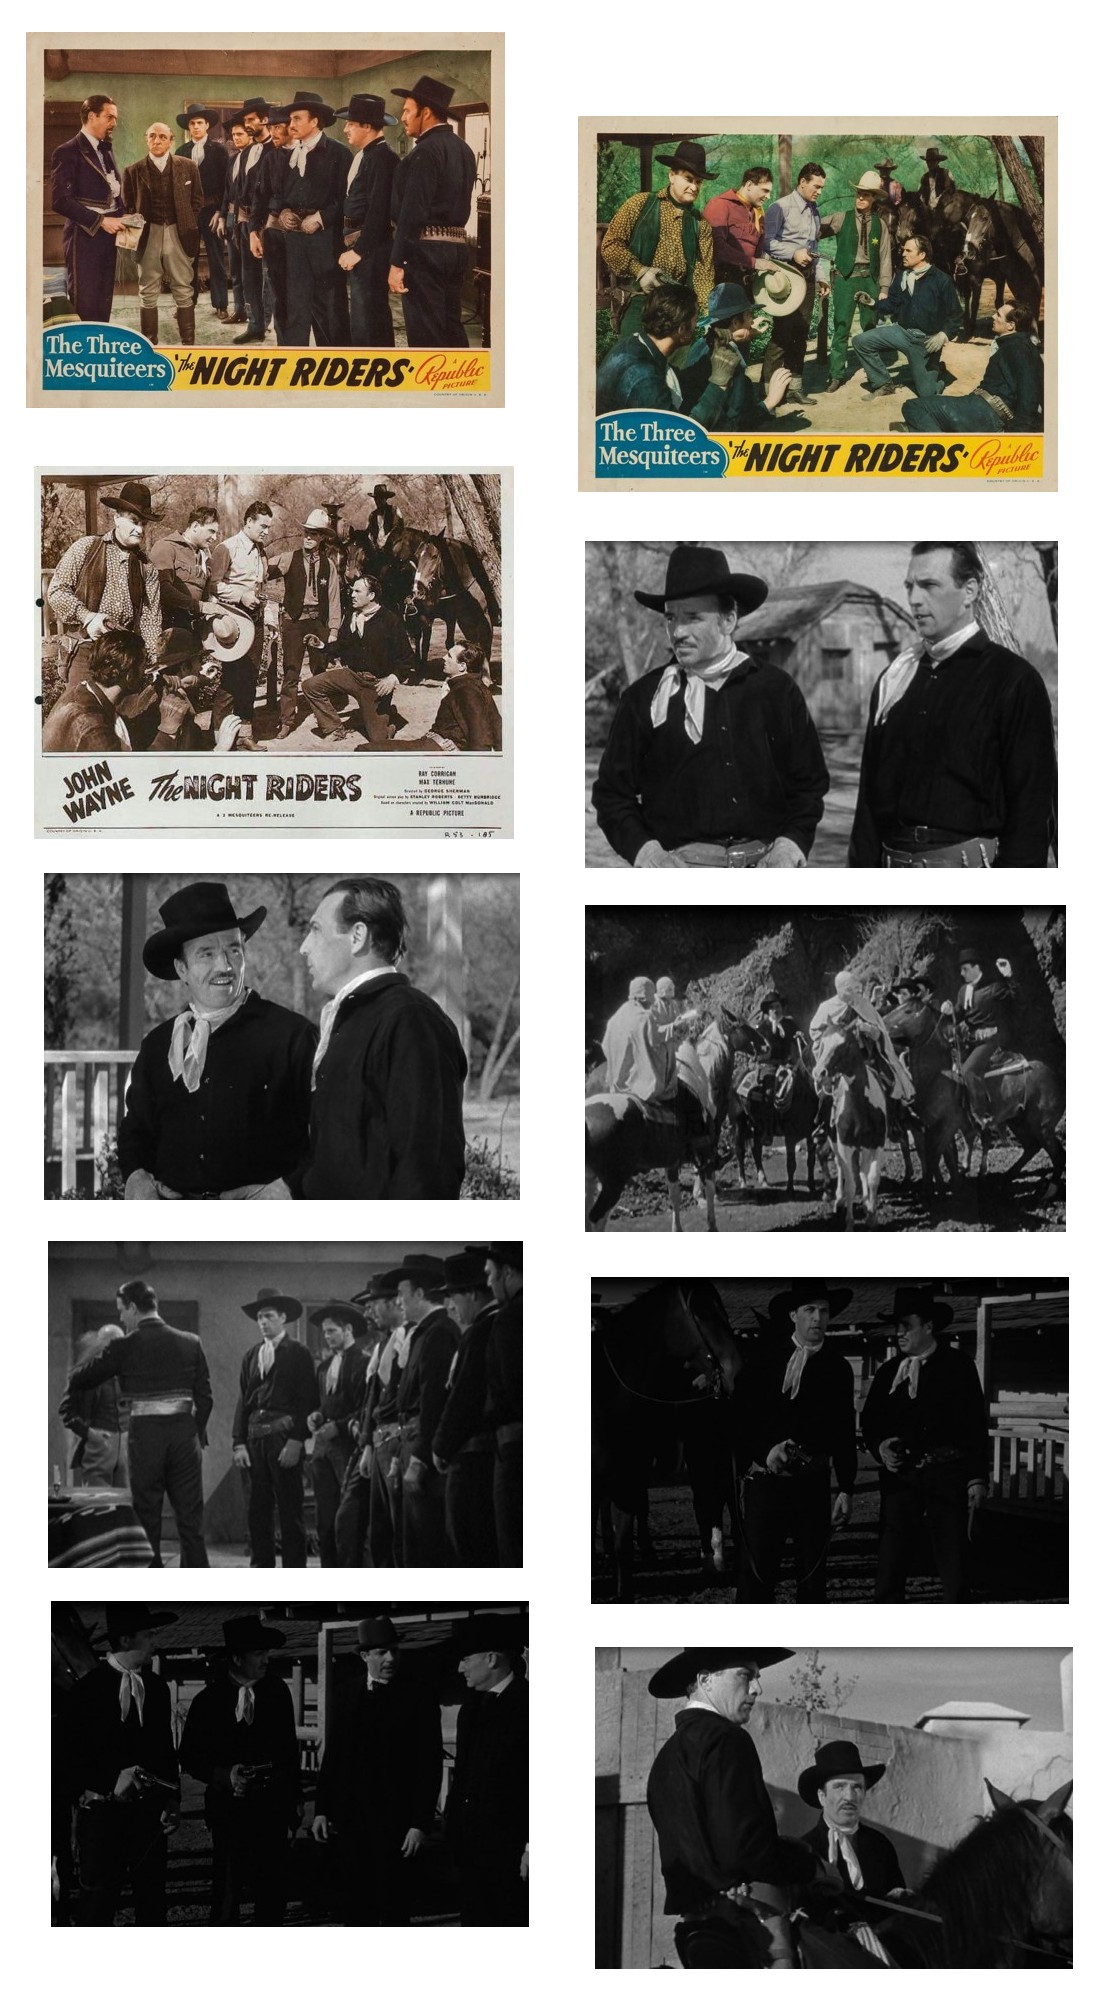 The Night Riders lobby cards film still screencaps